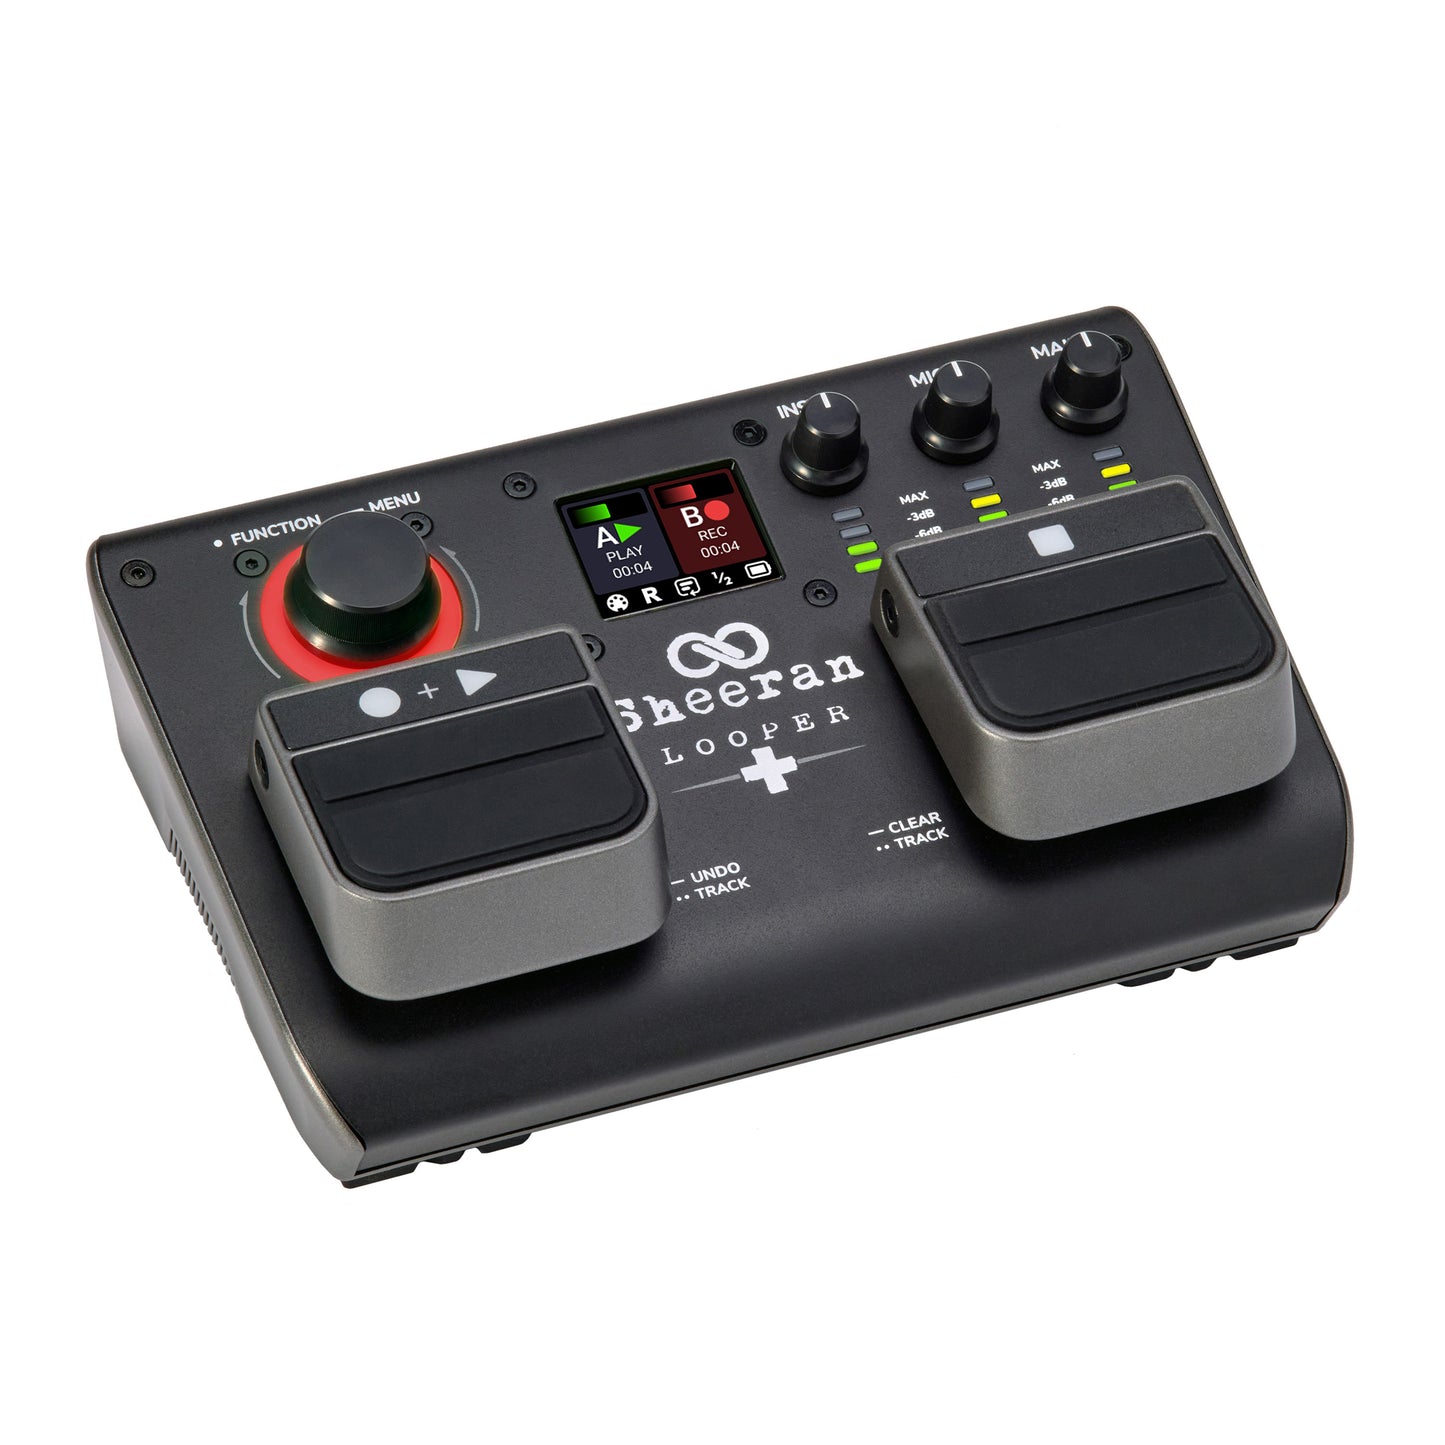 Portable Dual-track Looper Pedal SHEERAN LOOPER+ 4 Looper Modes: Single, Multi, Sync, And Song B-STOCK